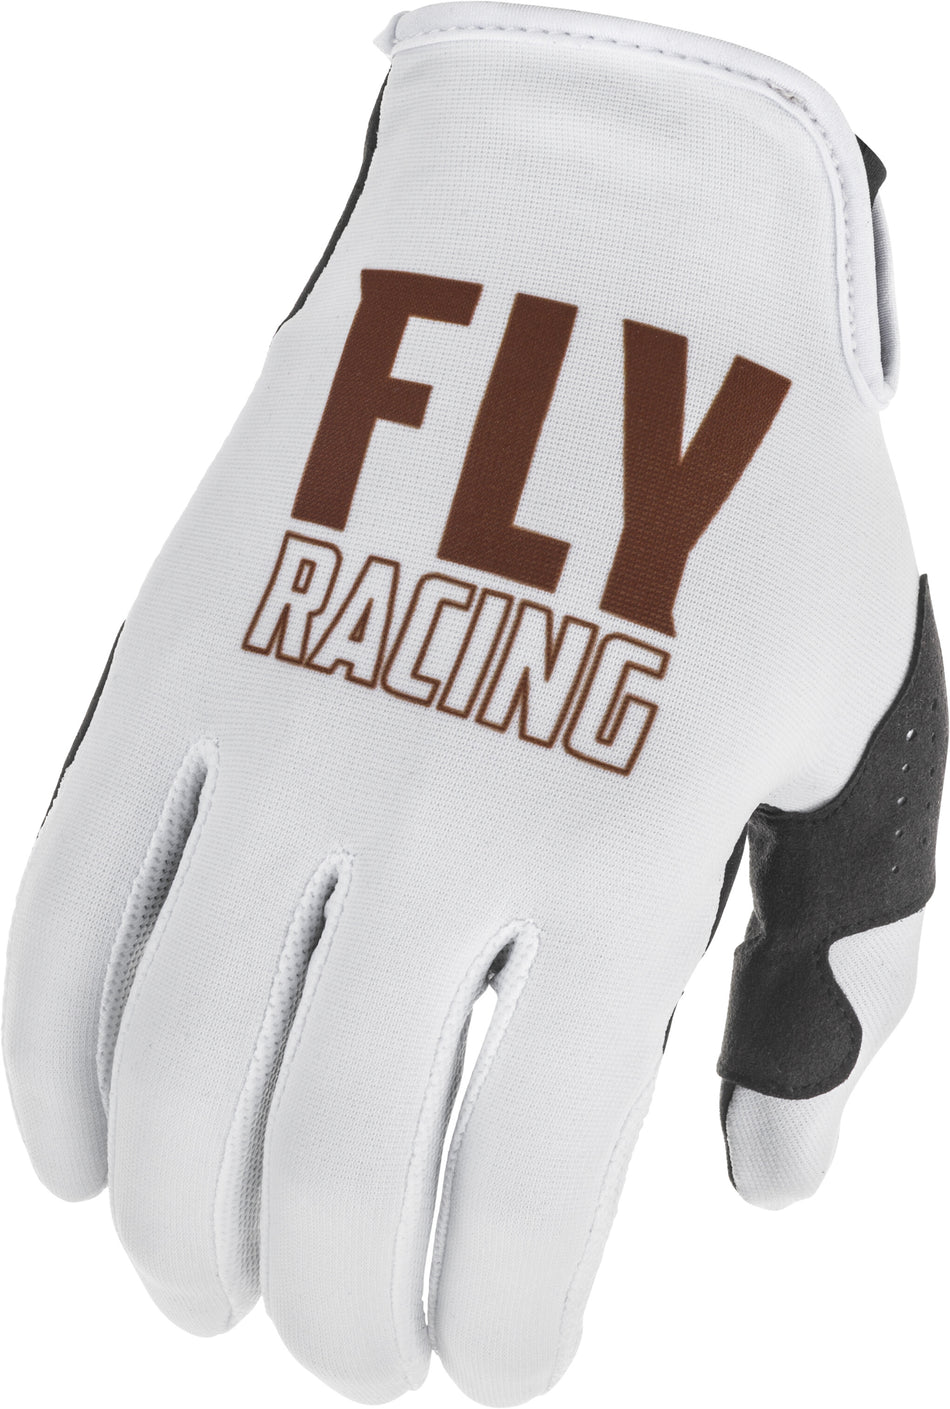 FLY RACING Lite L.E. Gloves White/Copper Sz 10 374-71910